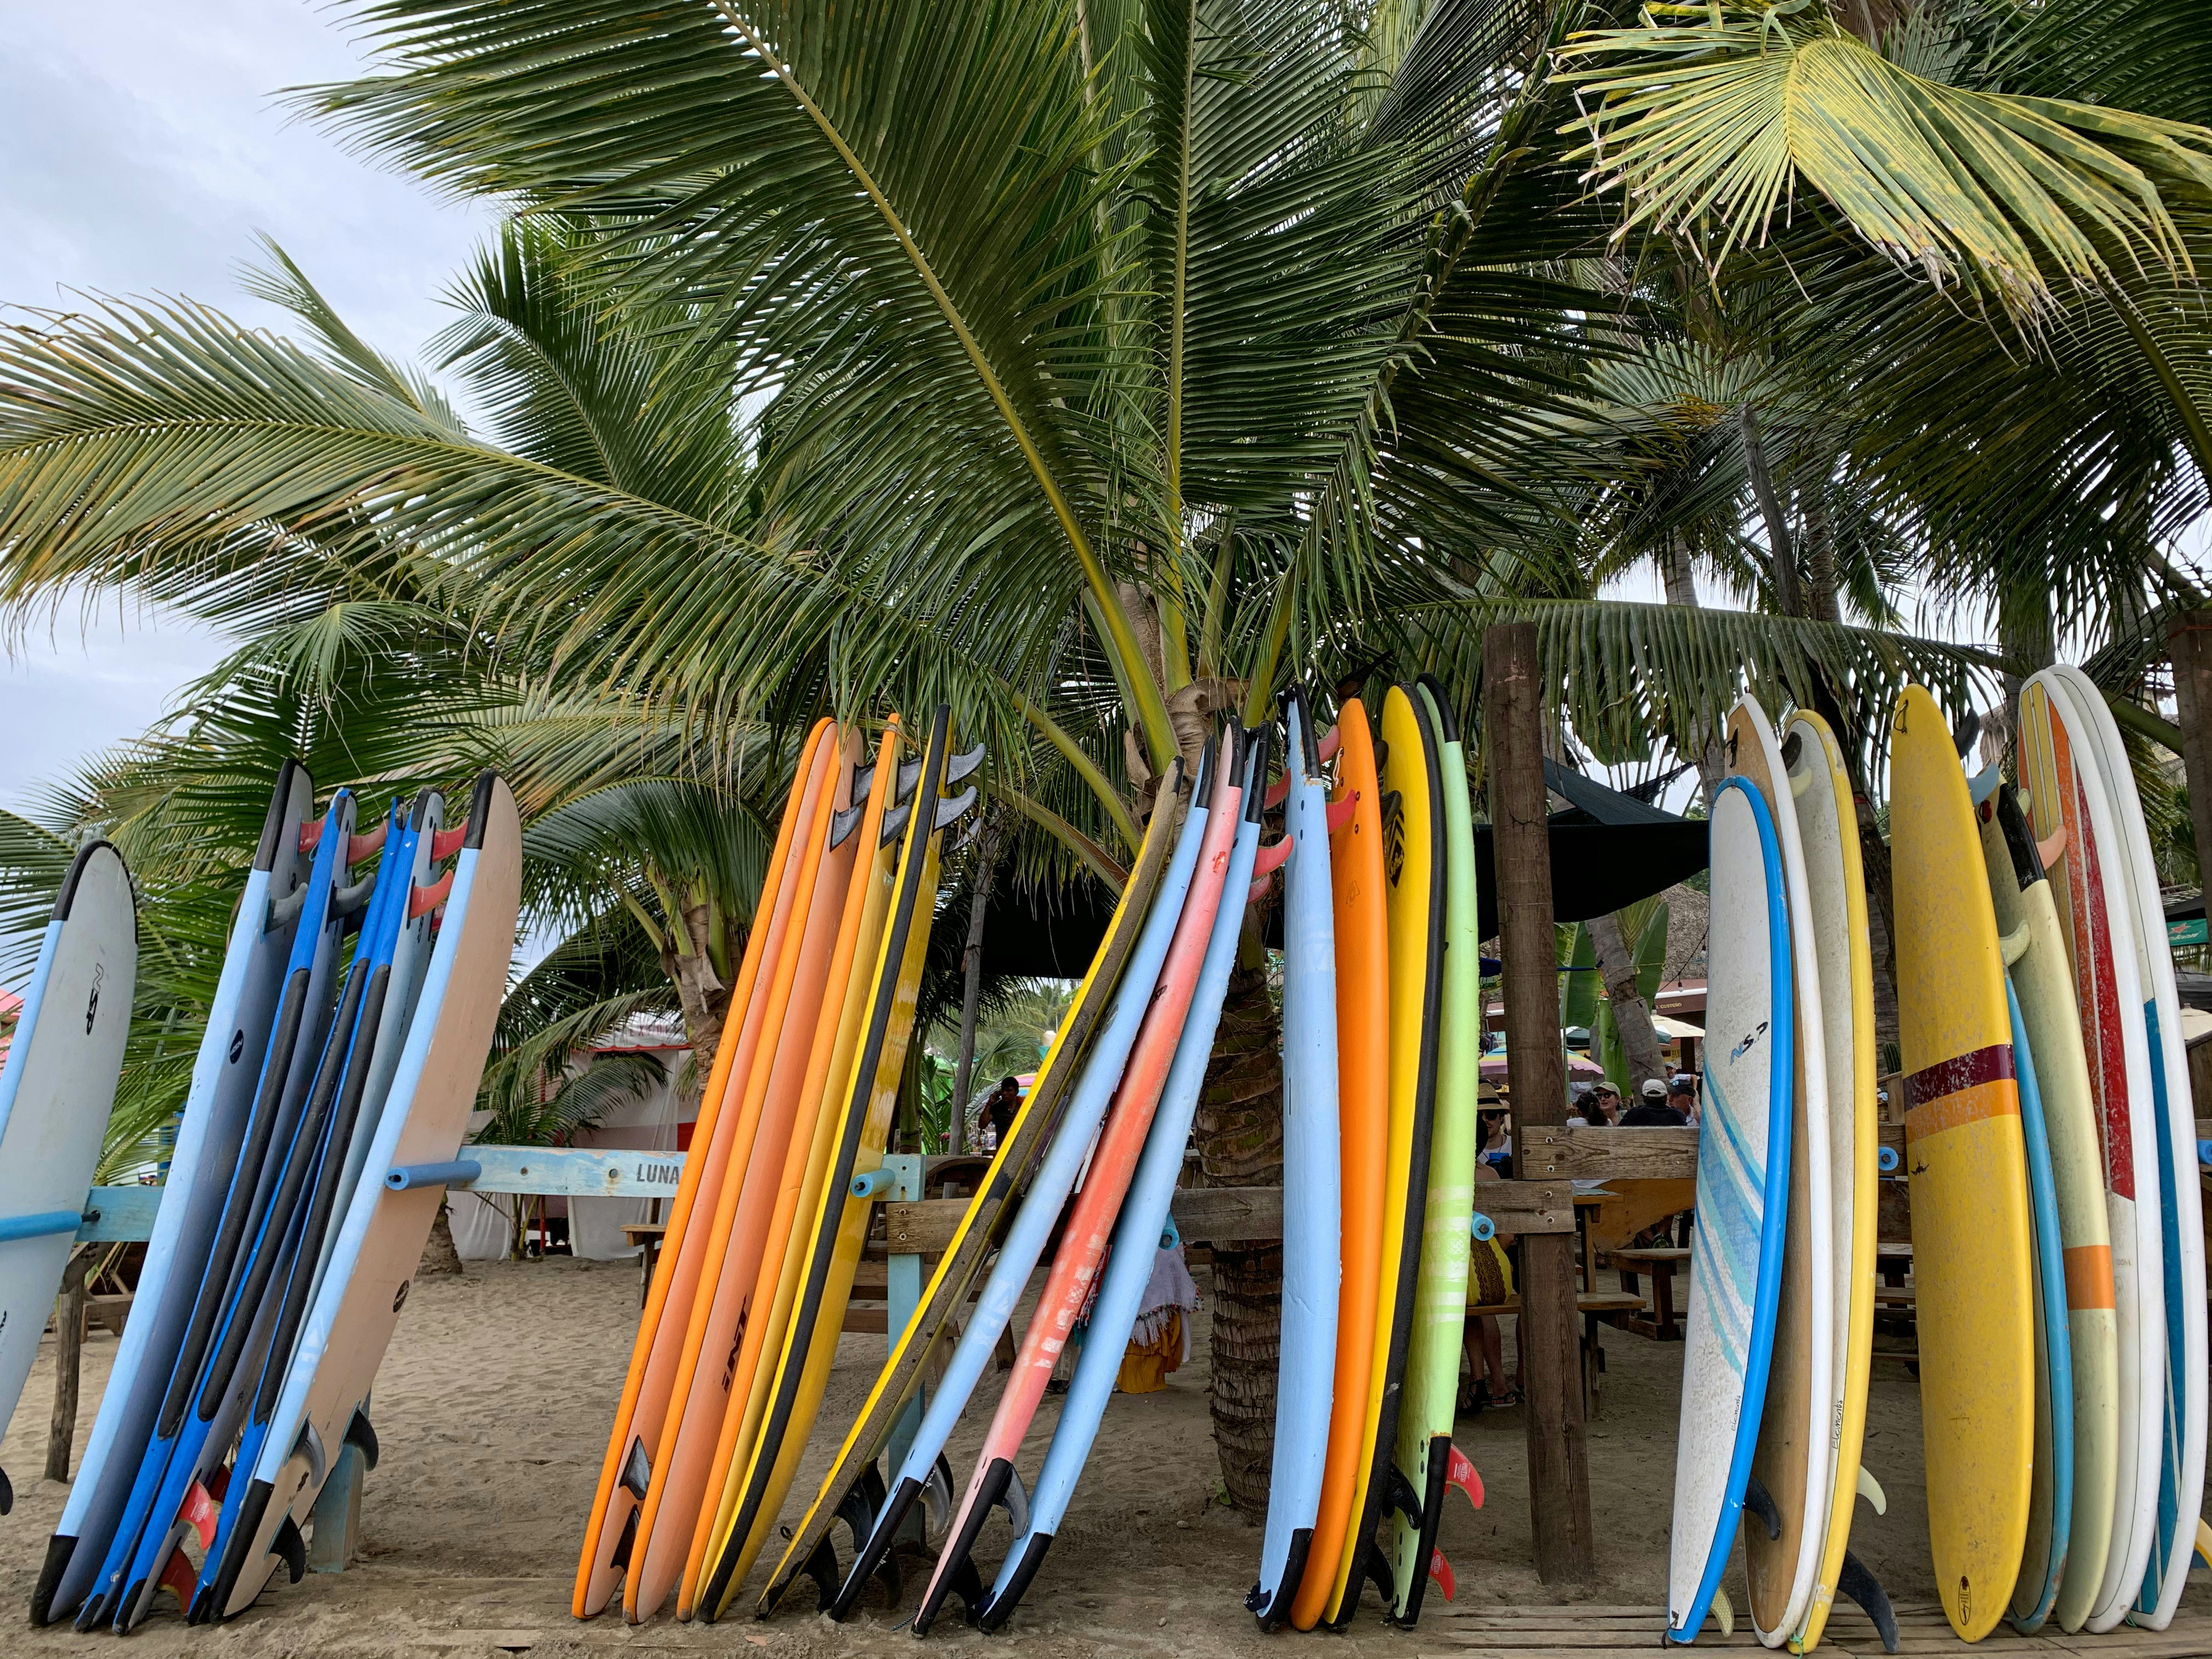 Surfboards lined up near a beach